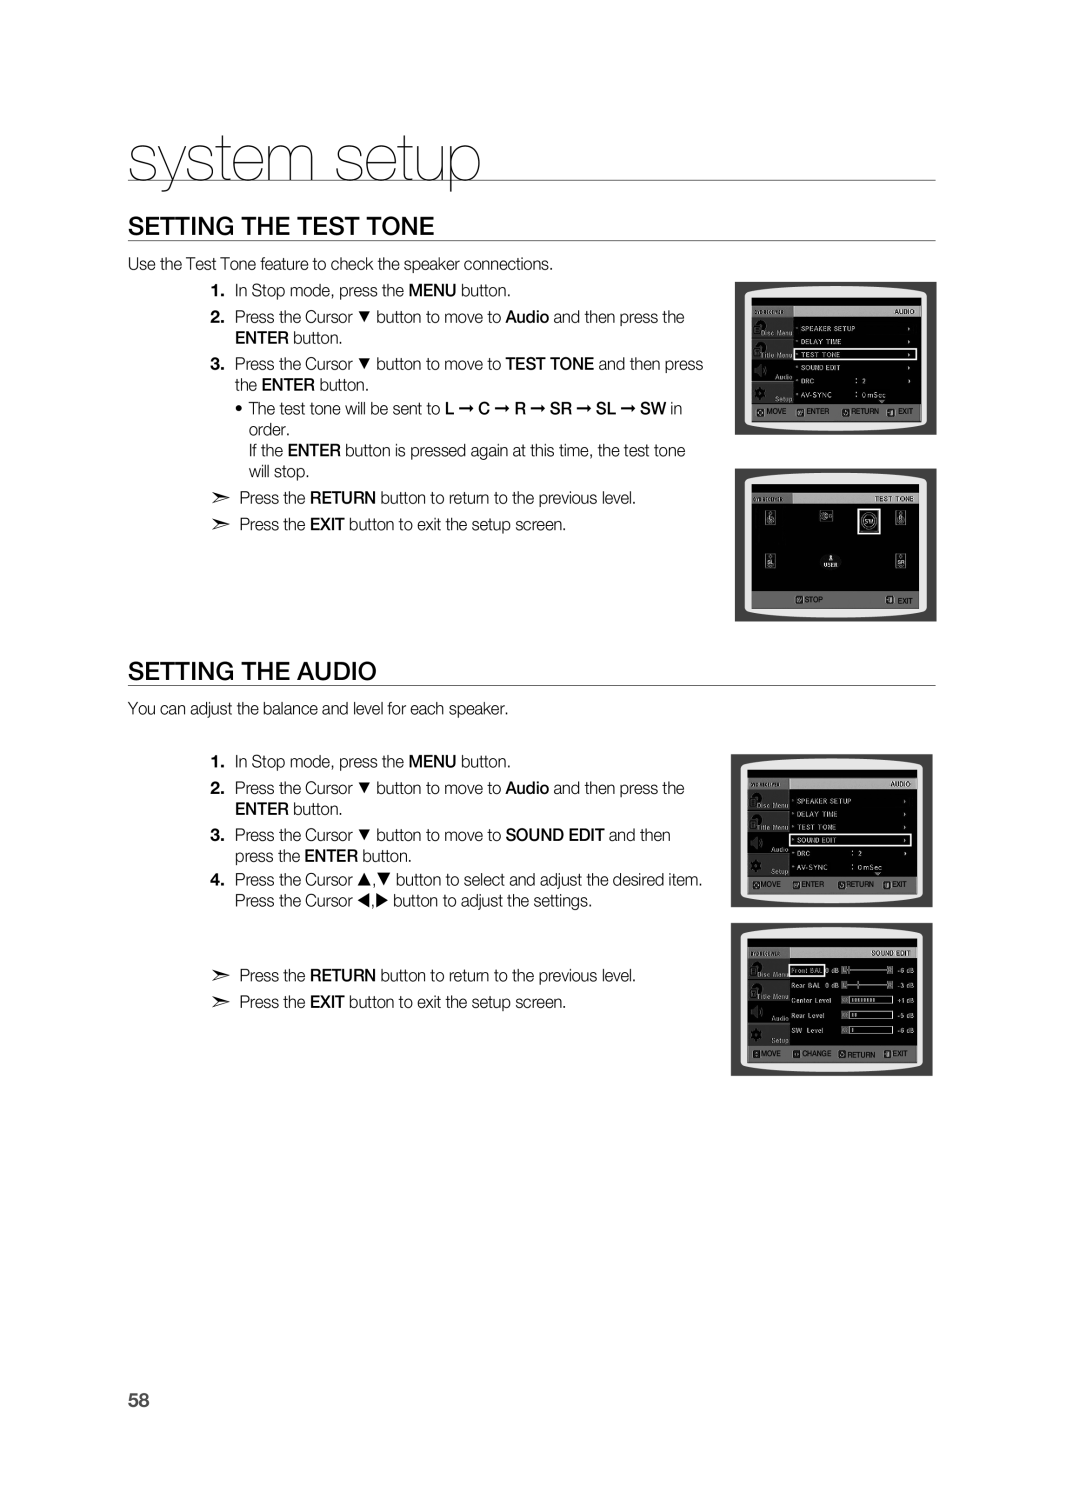 Samsung HT-Z510 manual Setting the Test Tone, Setting the Audio, system setup 